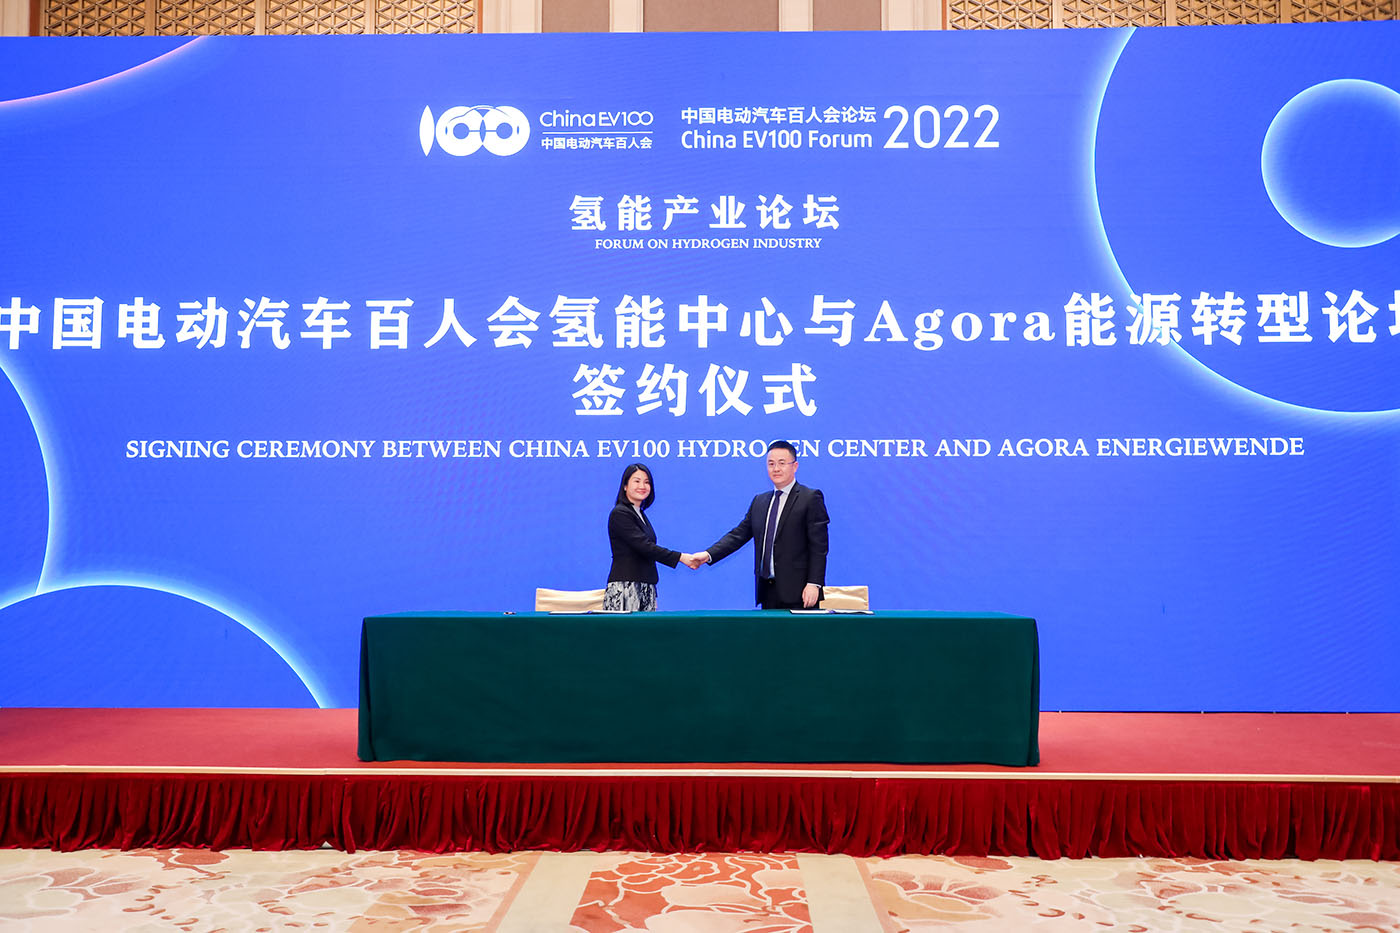 Agora Energy Transition and China EV100 Hydrogen Center signed a Memorandum of Understanding (MoU)